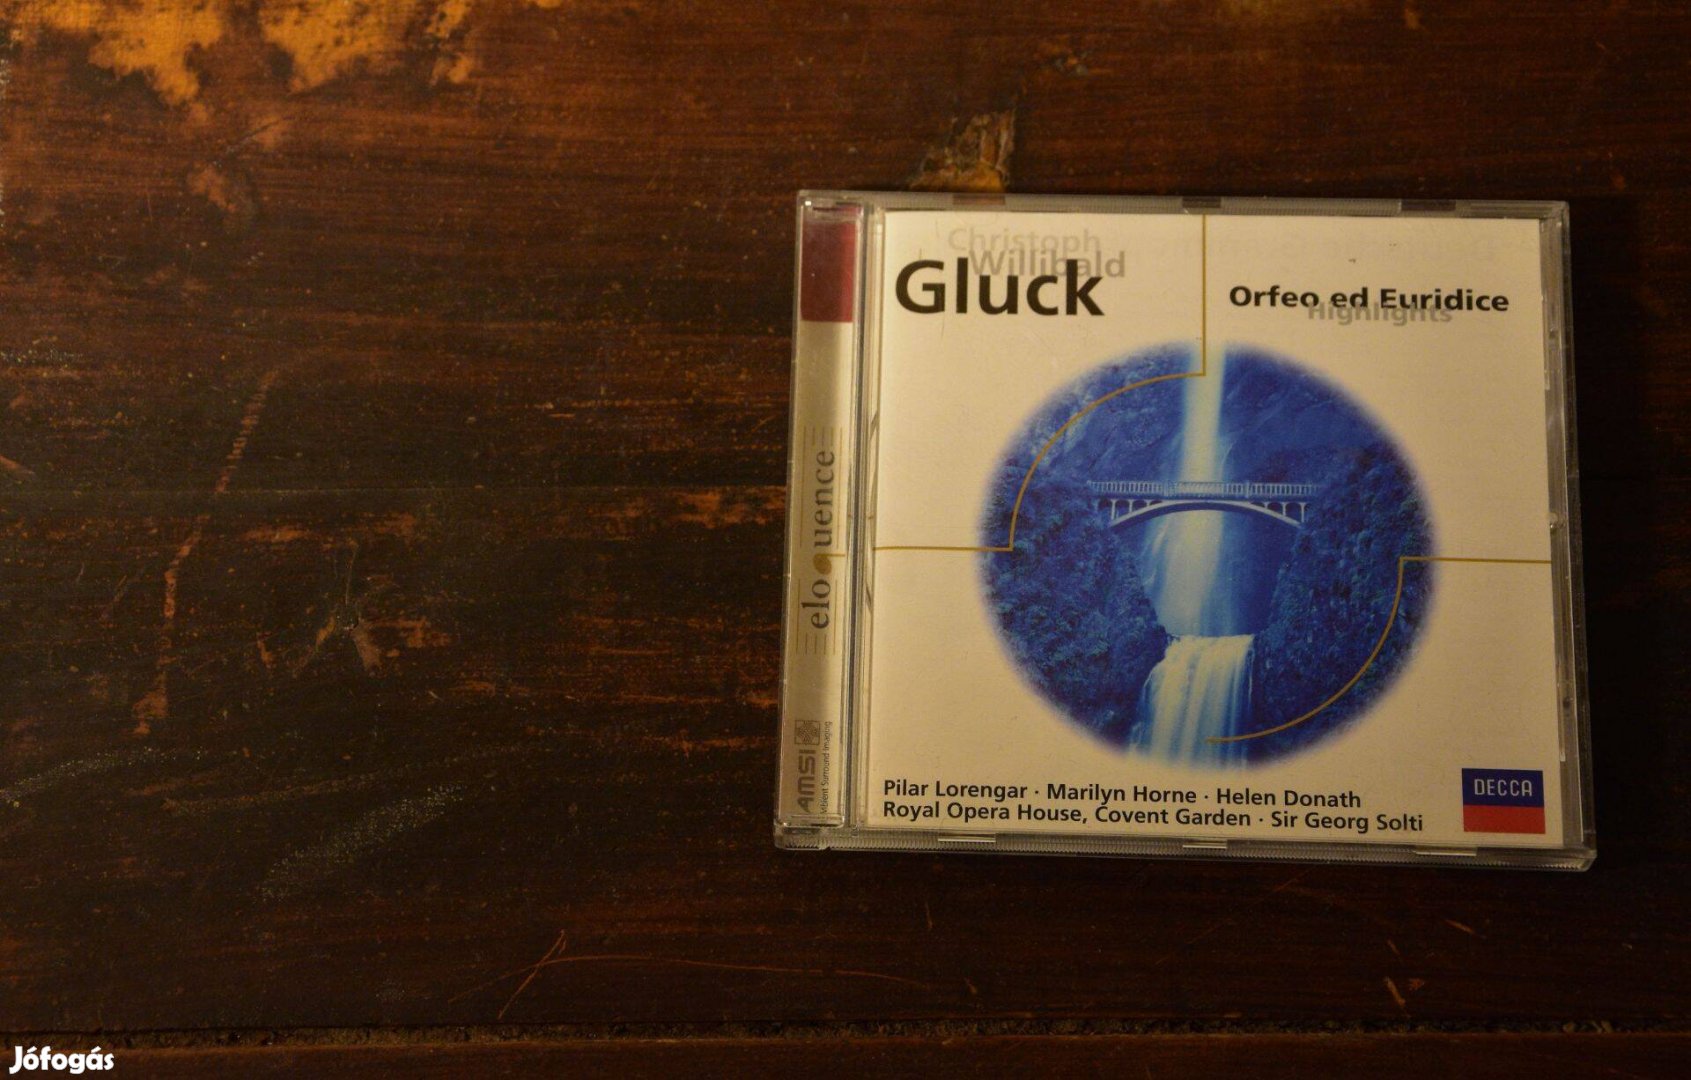 CD Gluck Orfeo ed Euridice highlights